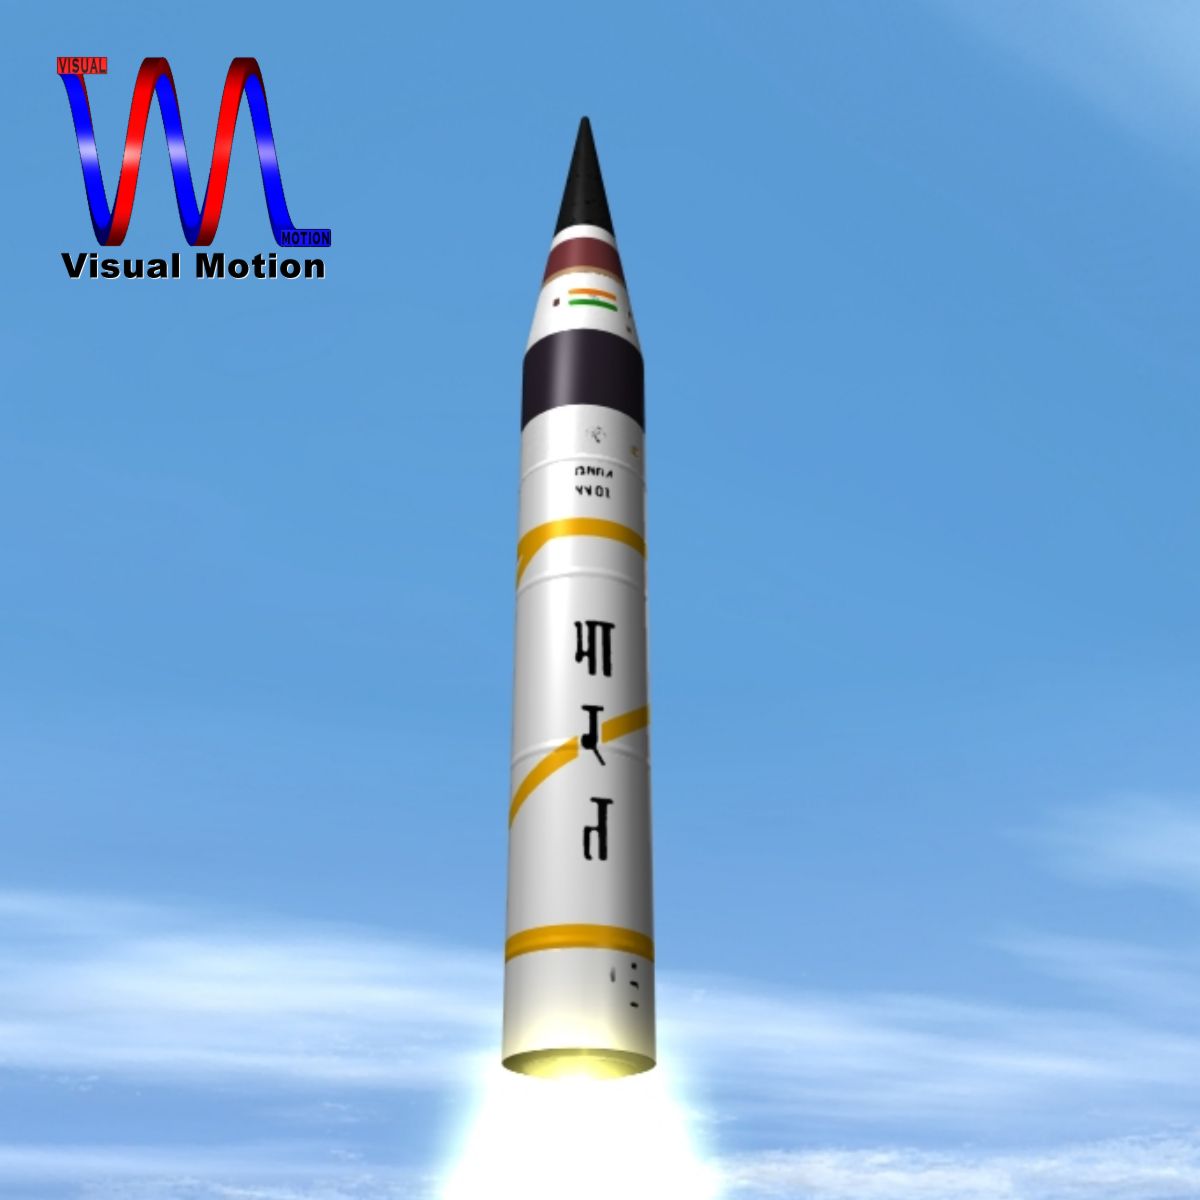 drdo agni-5-01 test missile 3d model 3ds dxf cob x other obj 136268